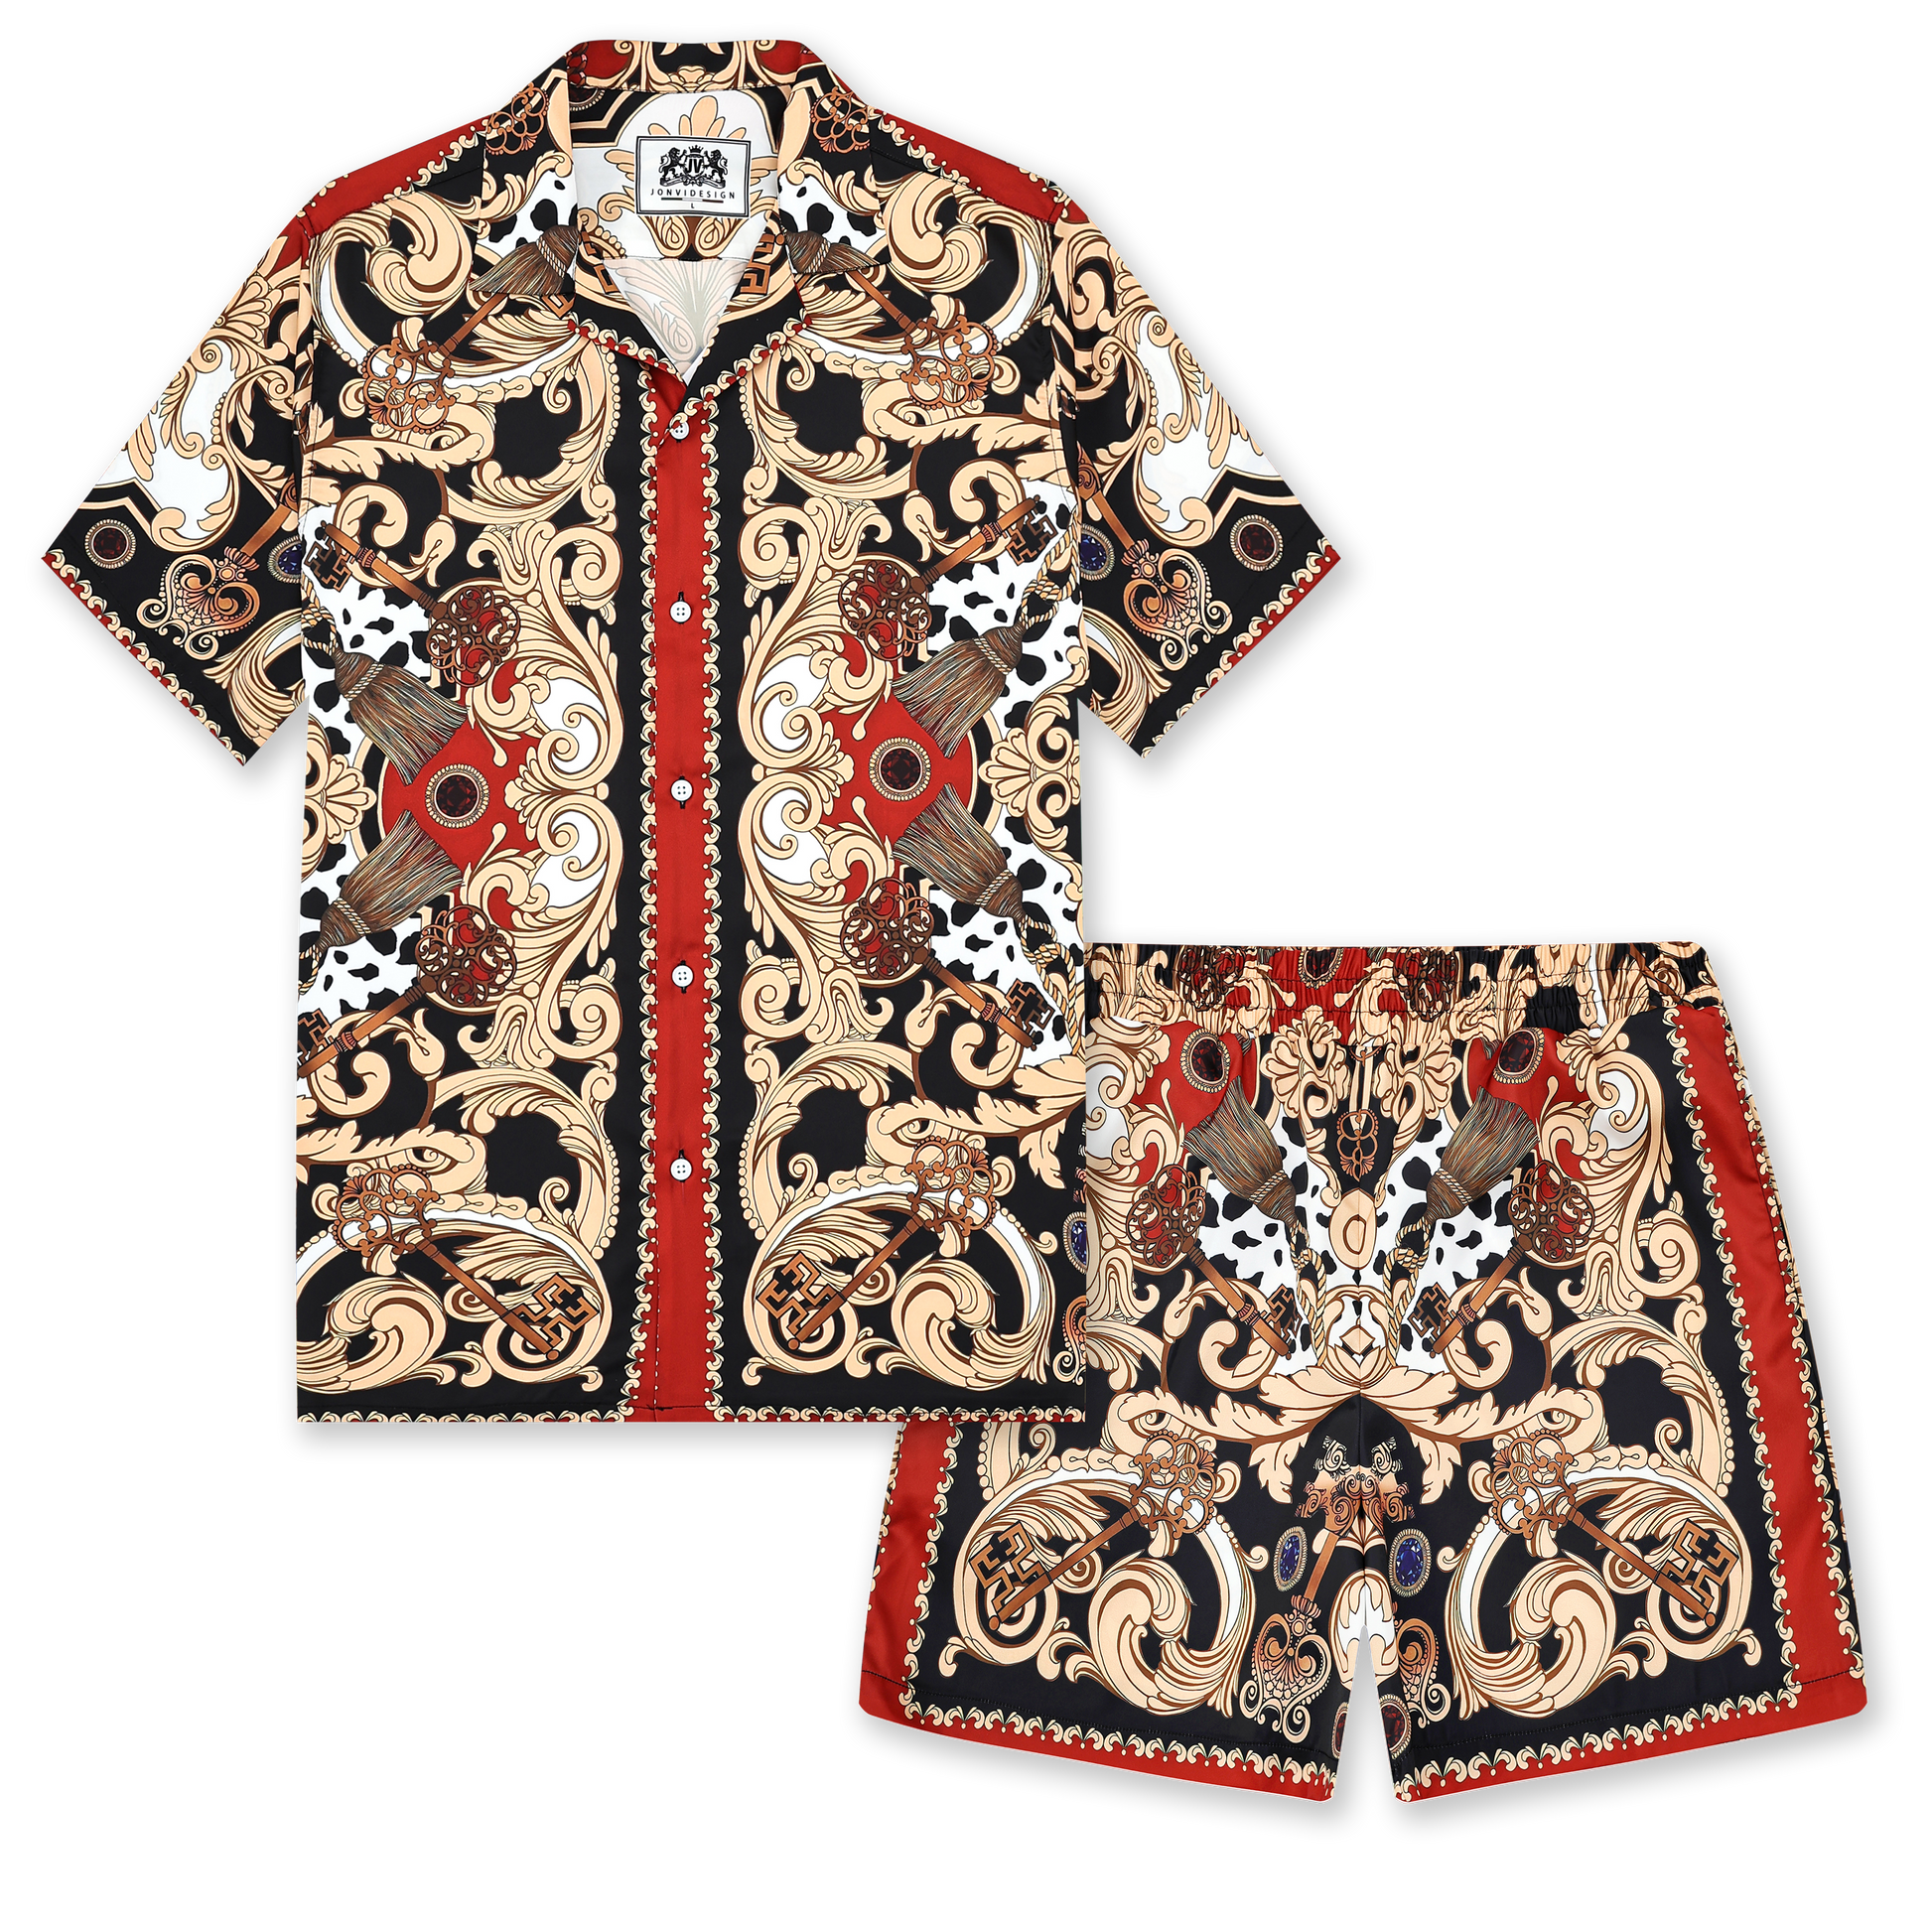 Baroque Pattern Drawstring-Free Casual Shorts in Red Jonvidesign